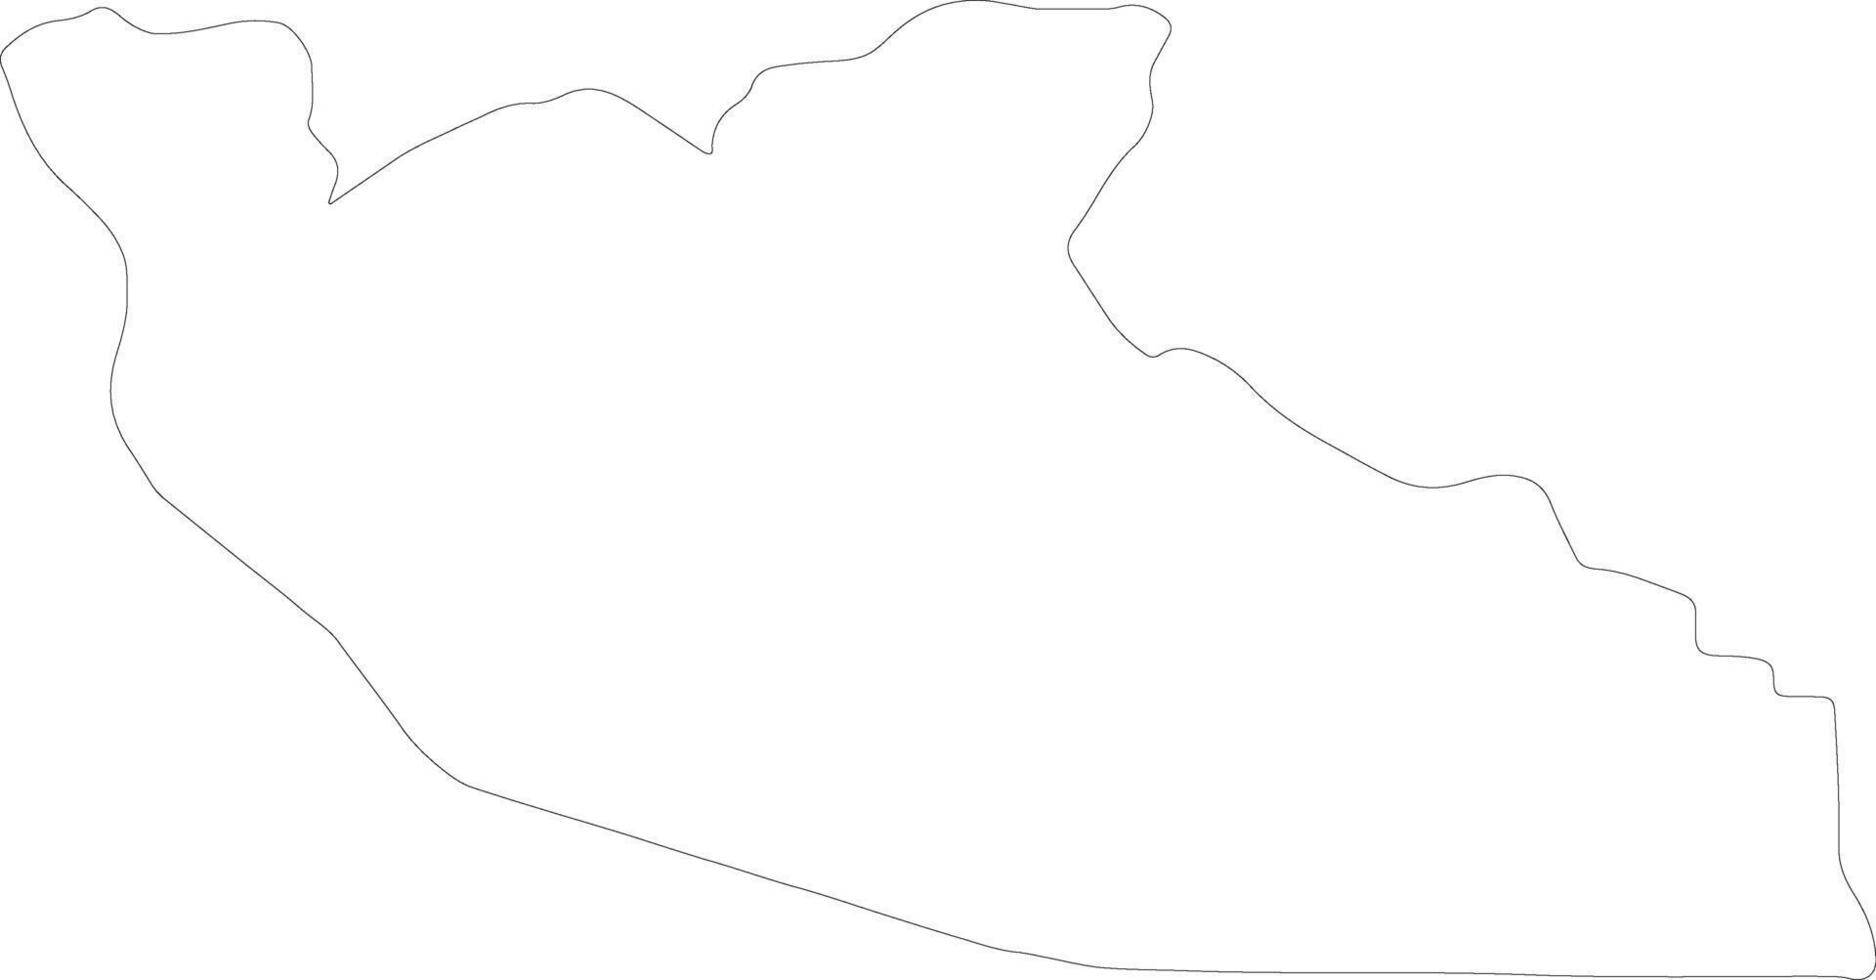 shiselweni Swaziland schema carta geografica vettore